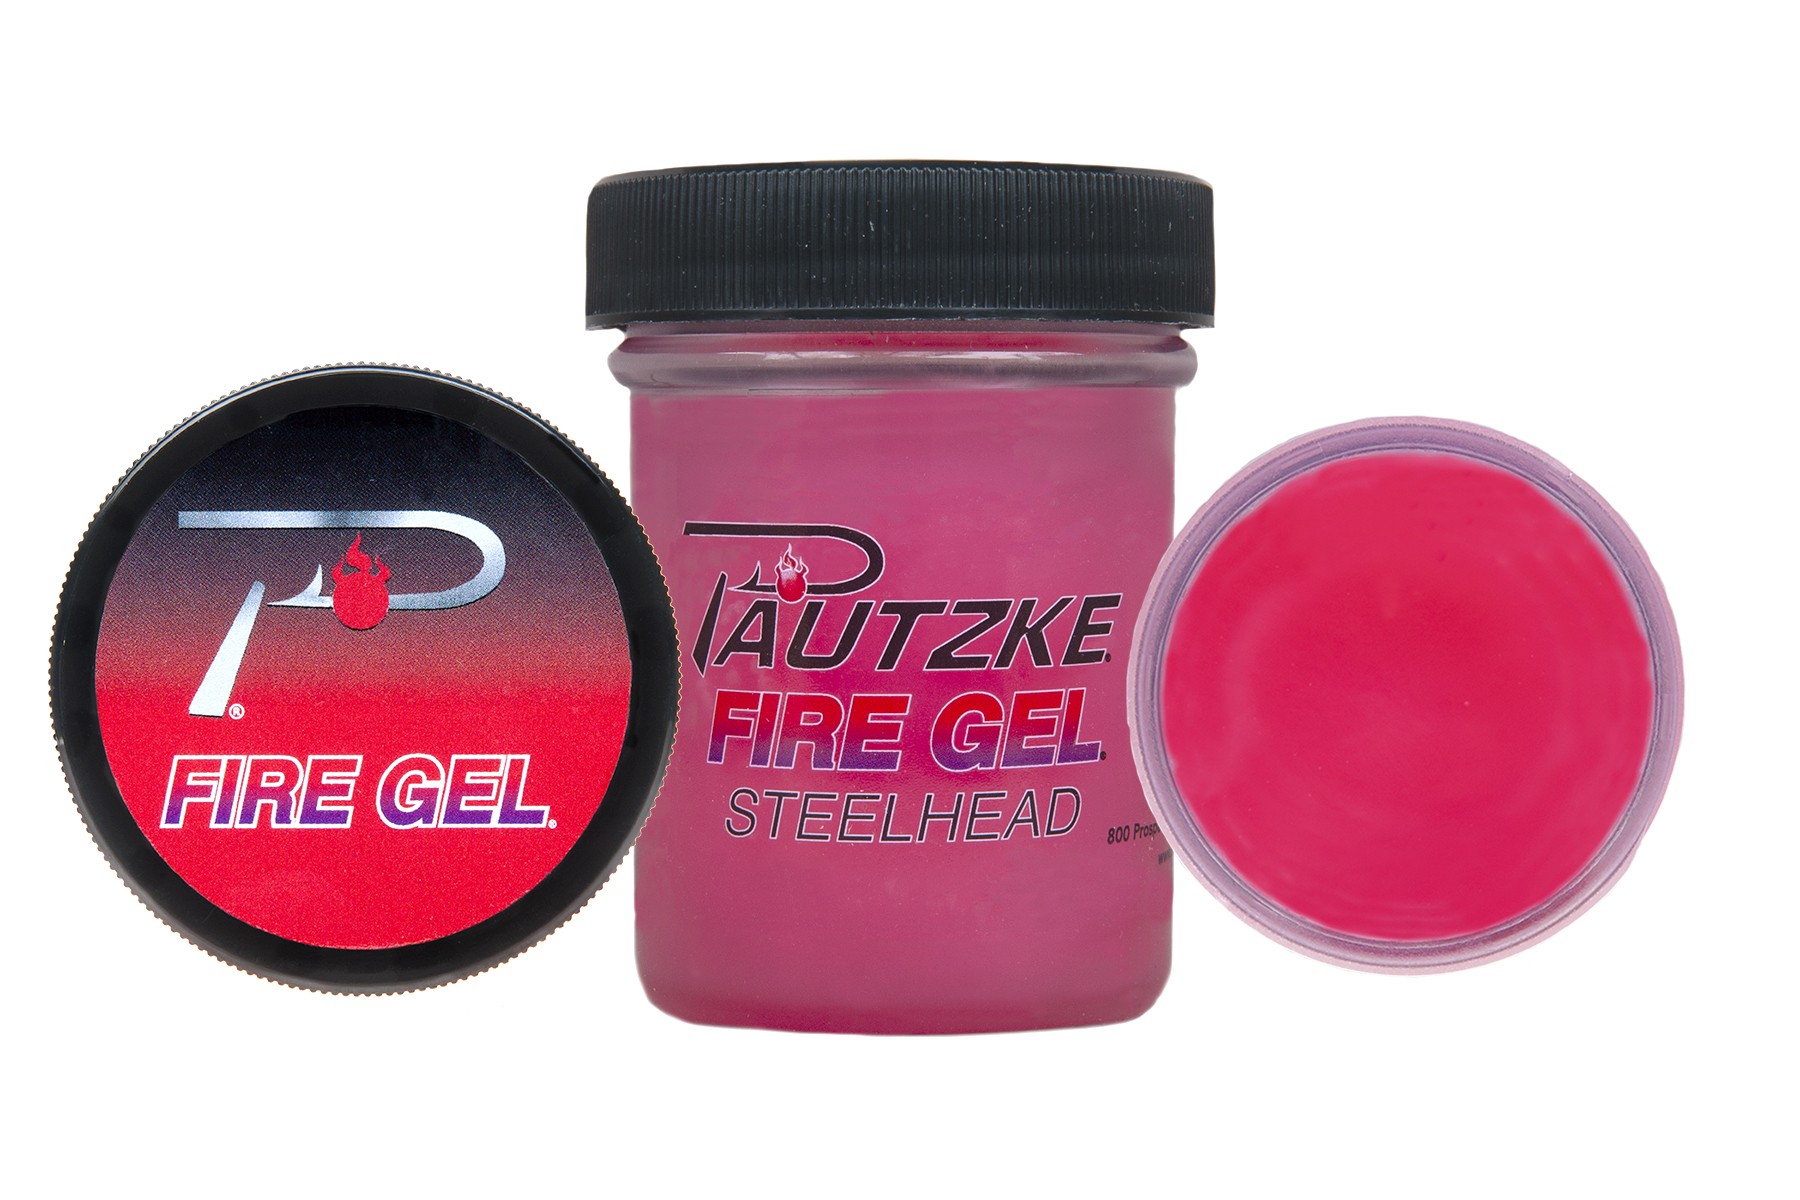 Pautzke PFGEL/SHAD FIRE GEL Shad 1.65oz jar for sale online